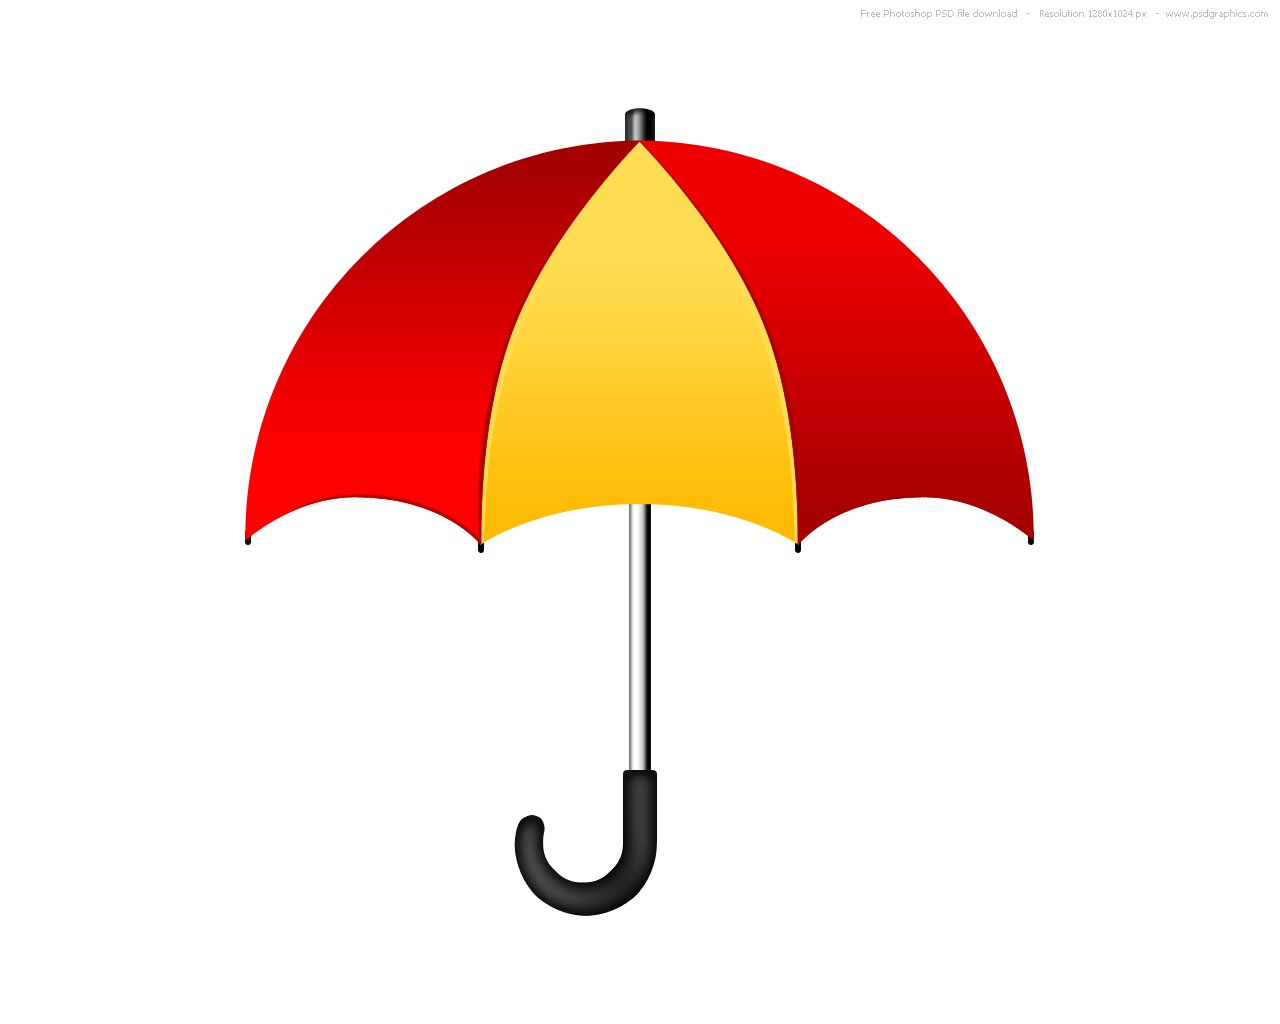 free clipart image umbrella - photo #46